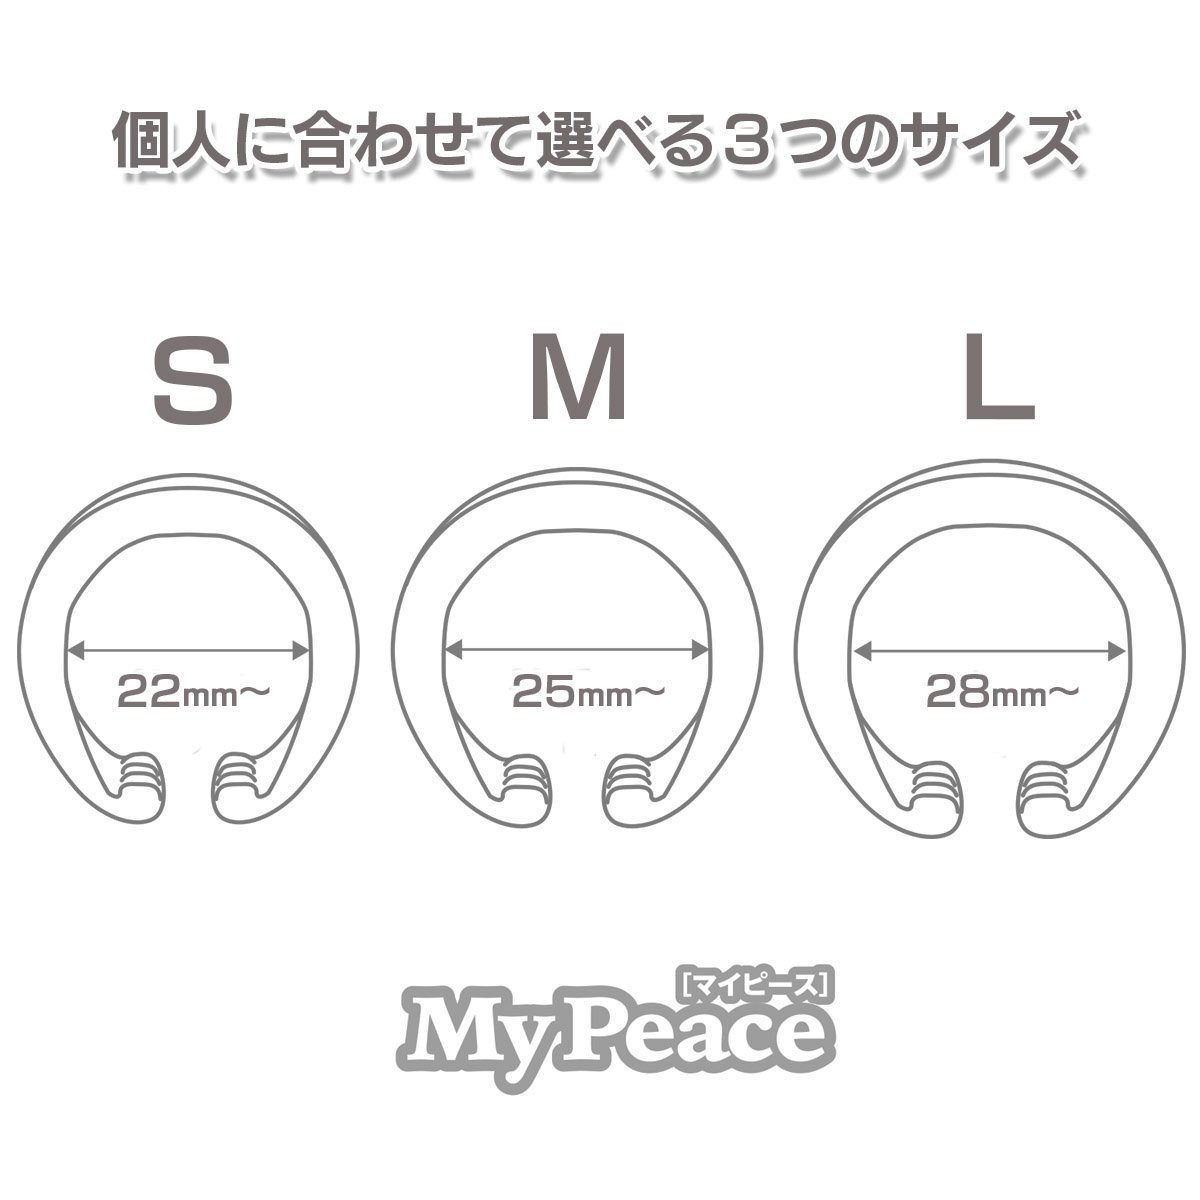 SSI JAPAN My Peace Soft 夜用標準版包莖矯正環 包莖矯正環 購買